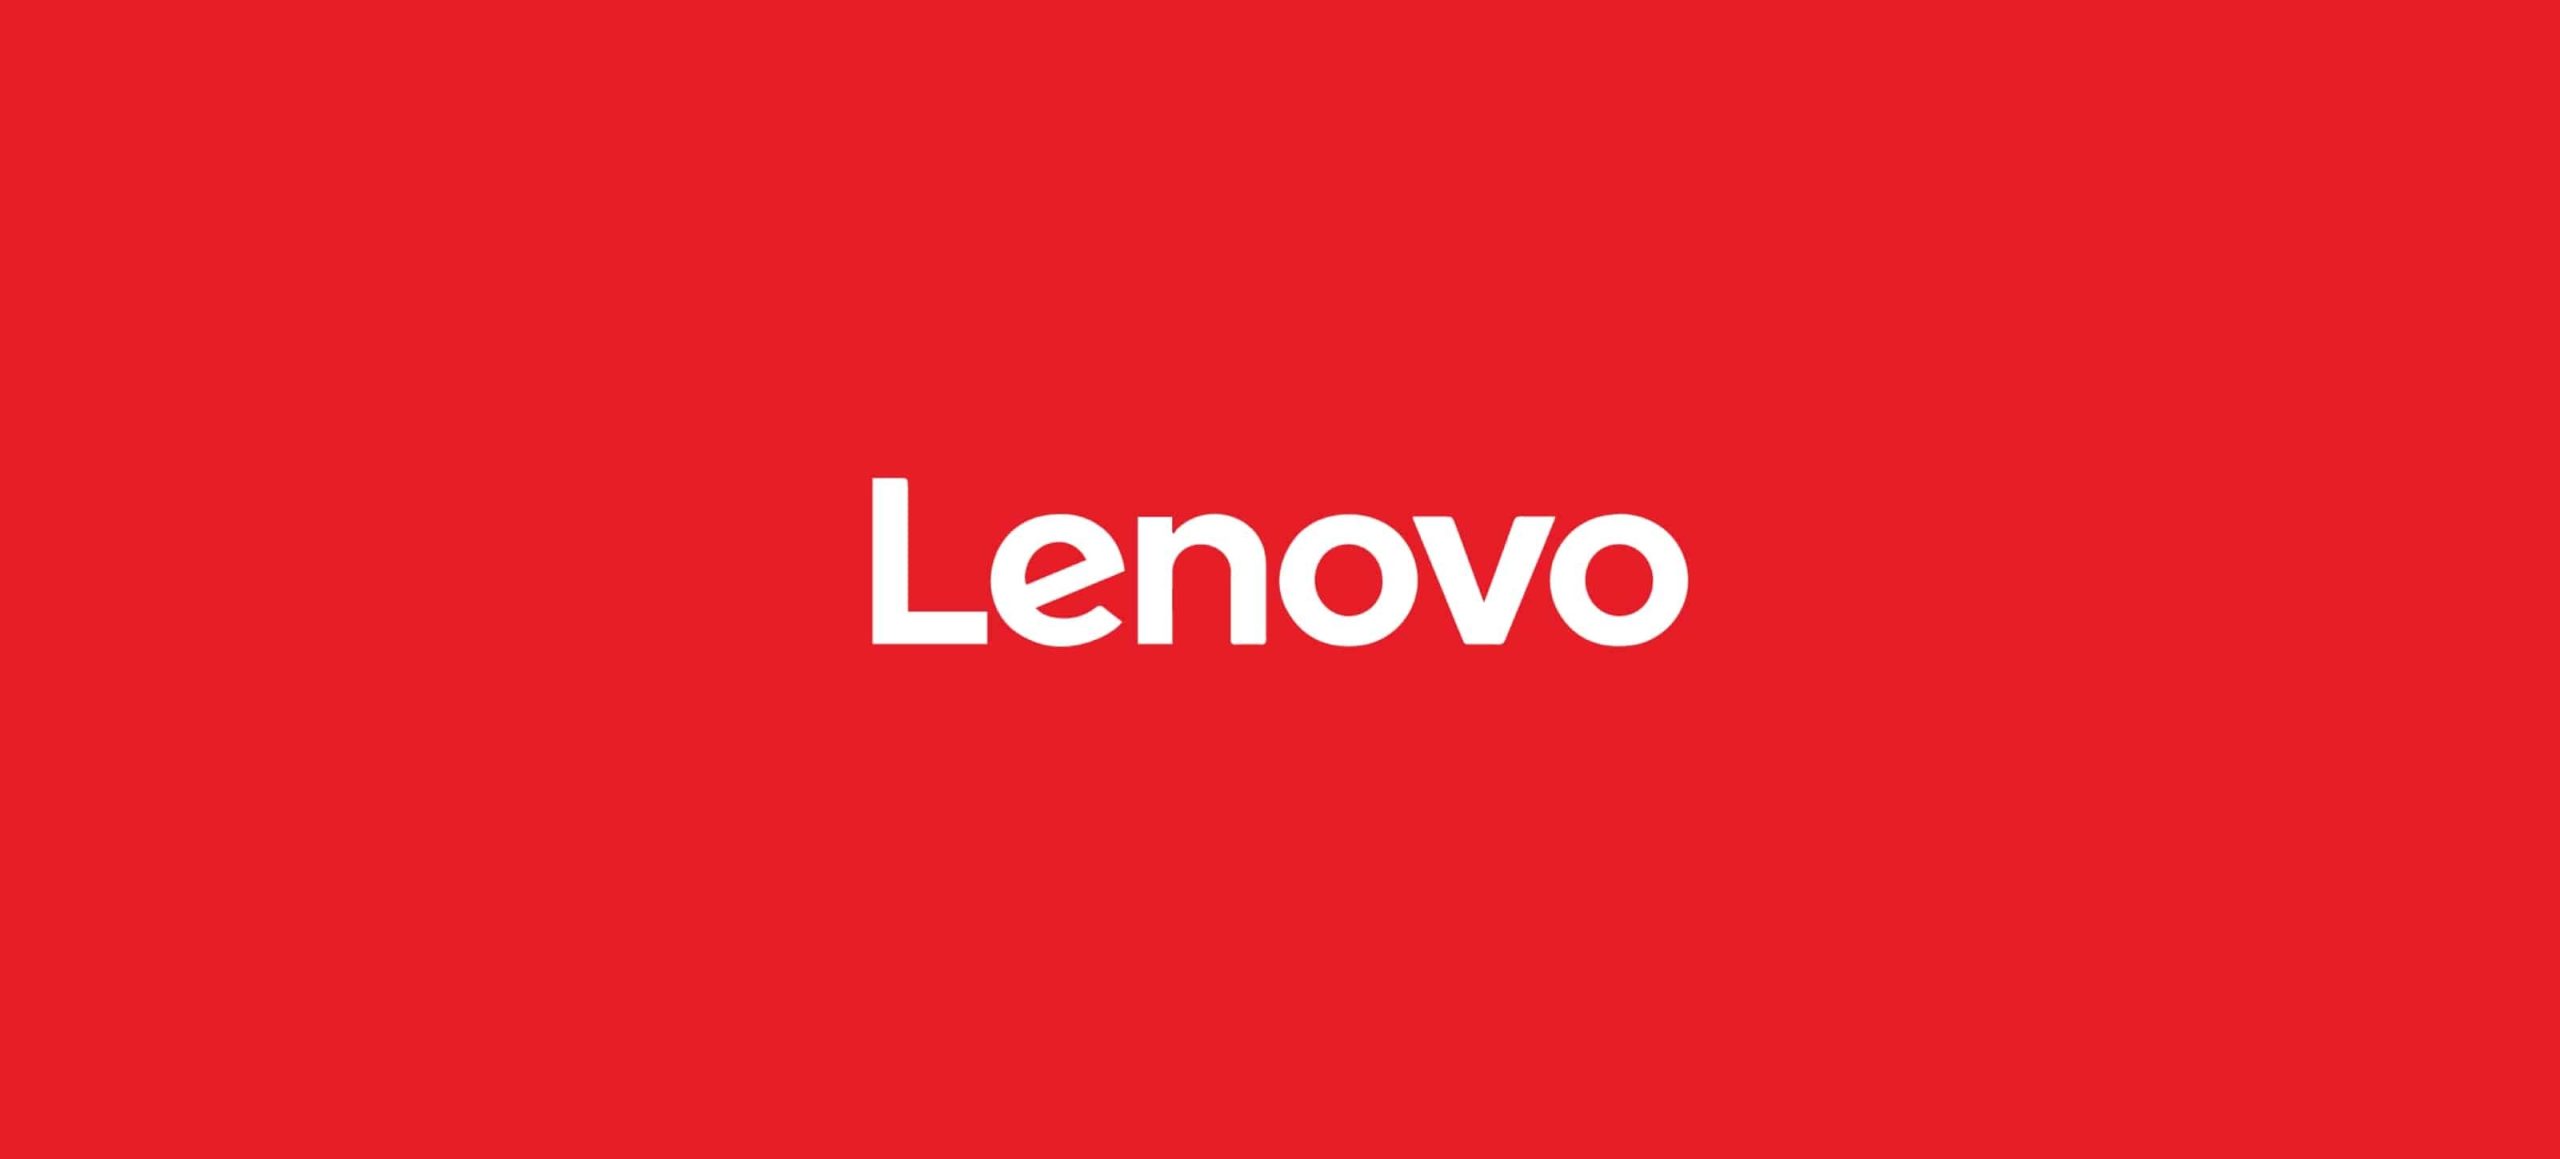 Lenovo логотип красный